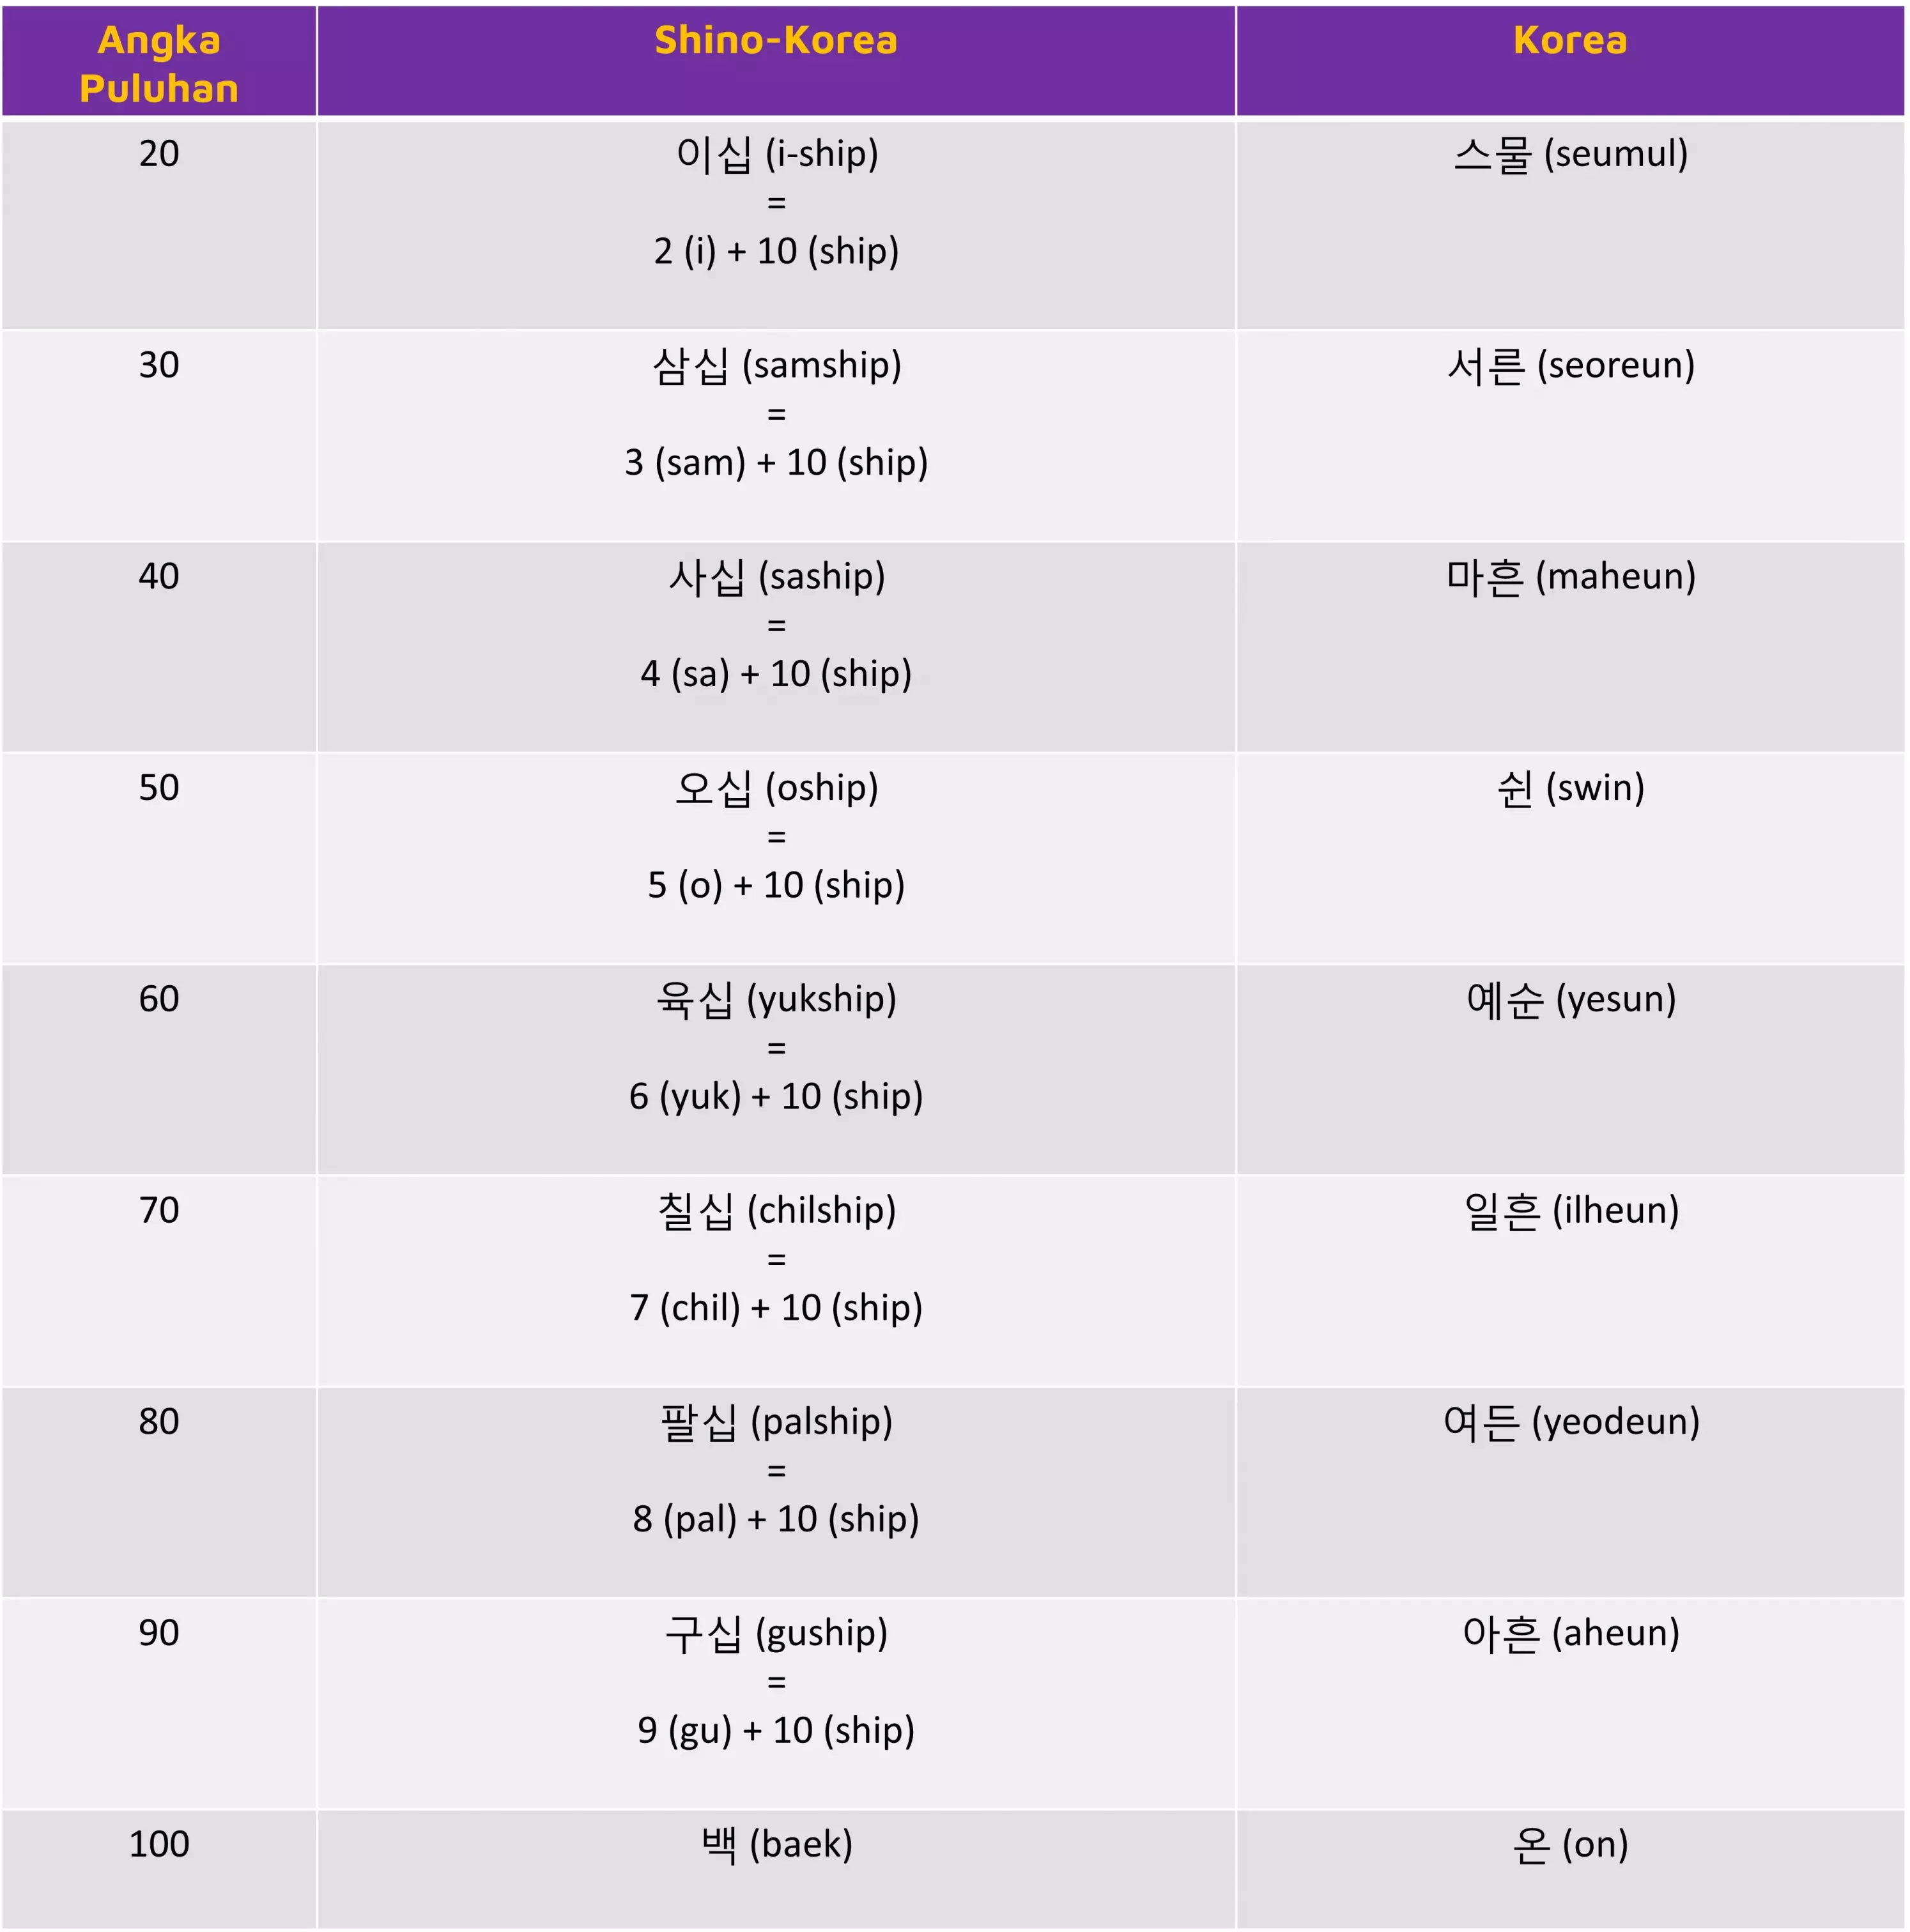 Daftar angka dalam bahasa Korea (puluhan) di sistem Korea asli dan sistem Sino-Korea